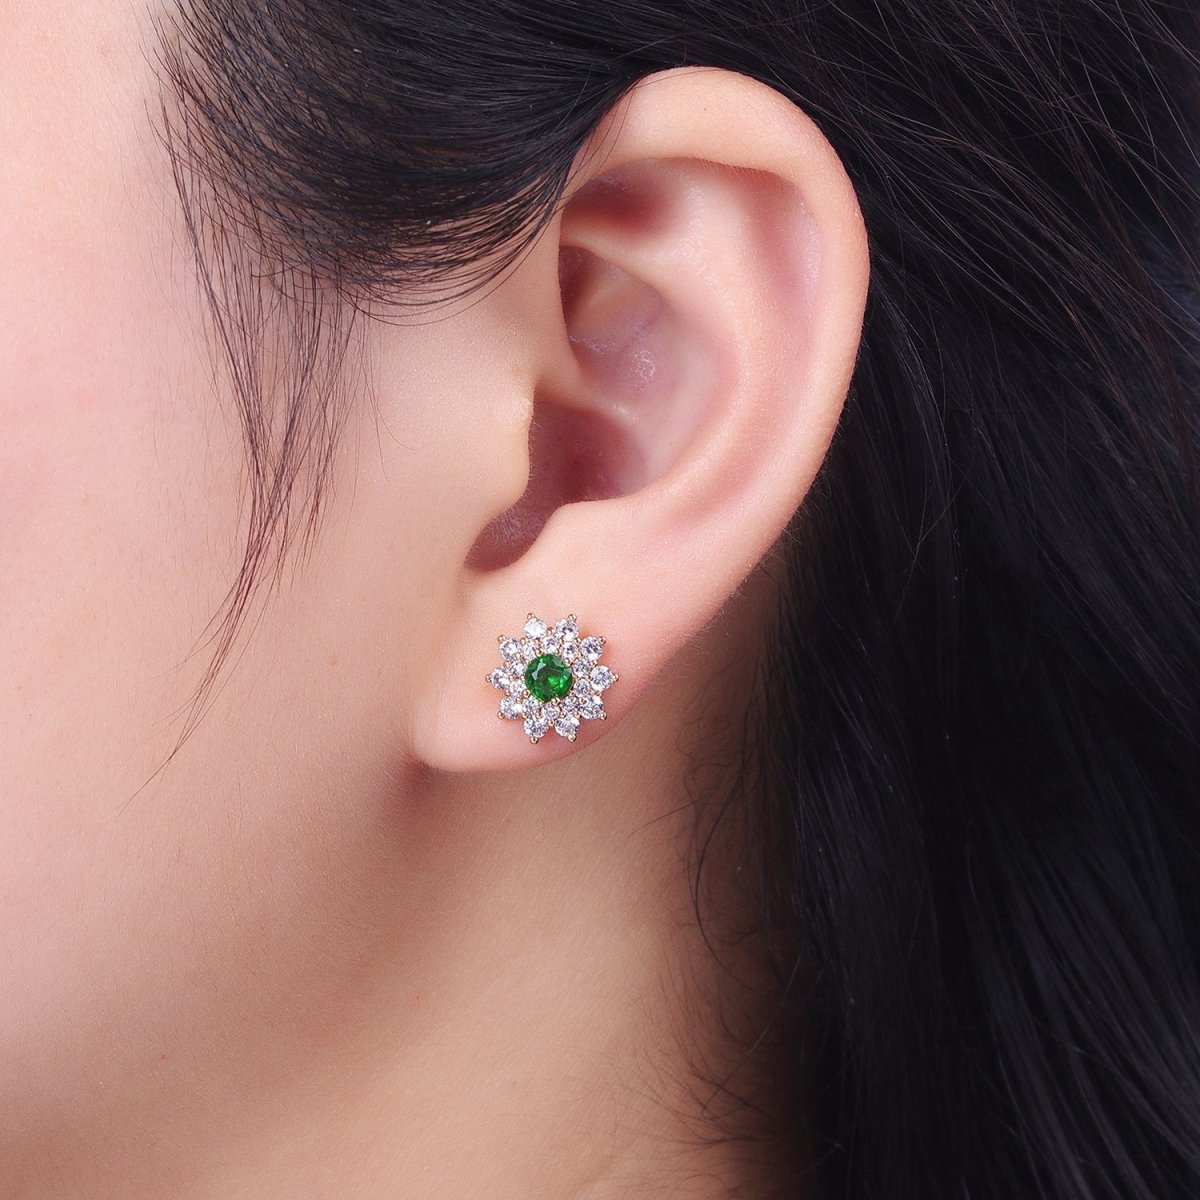 Pink, Clear, Green Celestial Star Flower CZ Stud Earrings | AB025 AB026 AB027 - DLUXCA